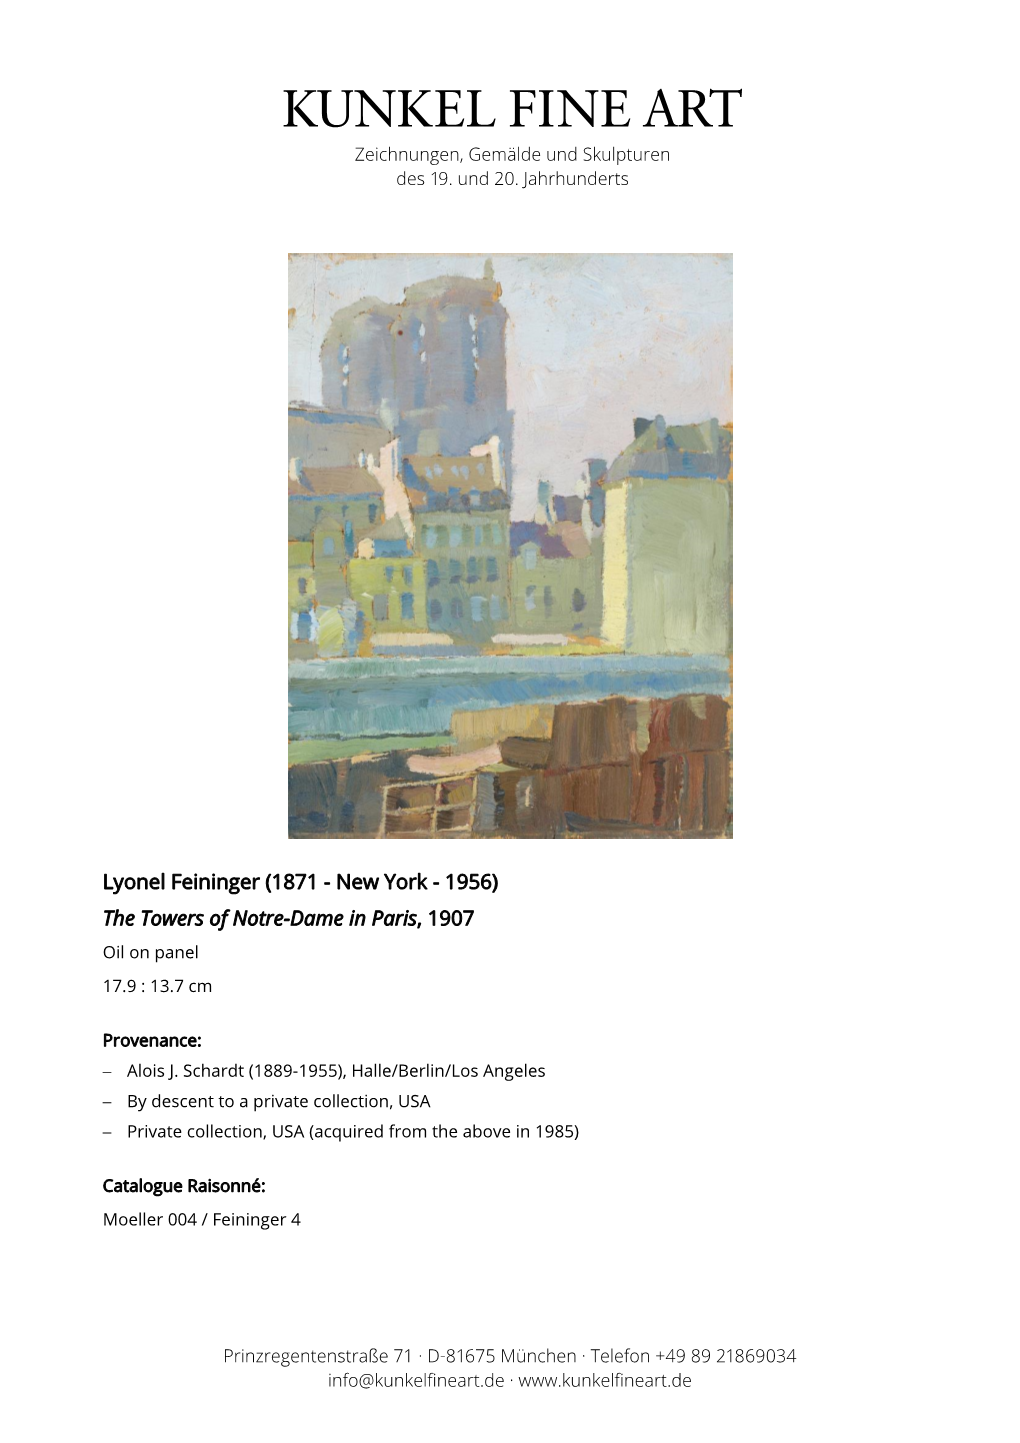 Lyonel Feininger (1871 - New York - 1956) the Towers of Notre-Dame in Paris, 1907 Oil on Panel 17.9 : 13.7 Cm